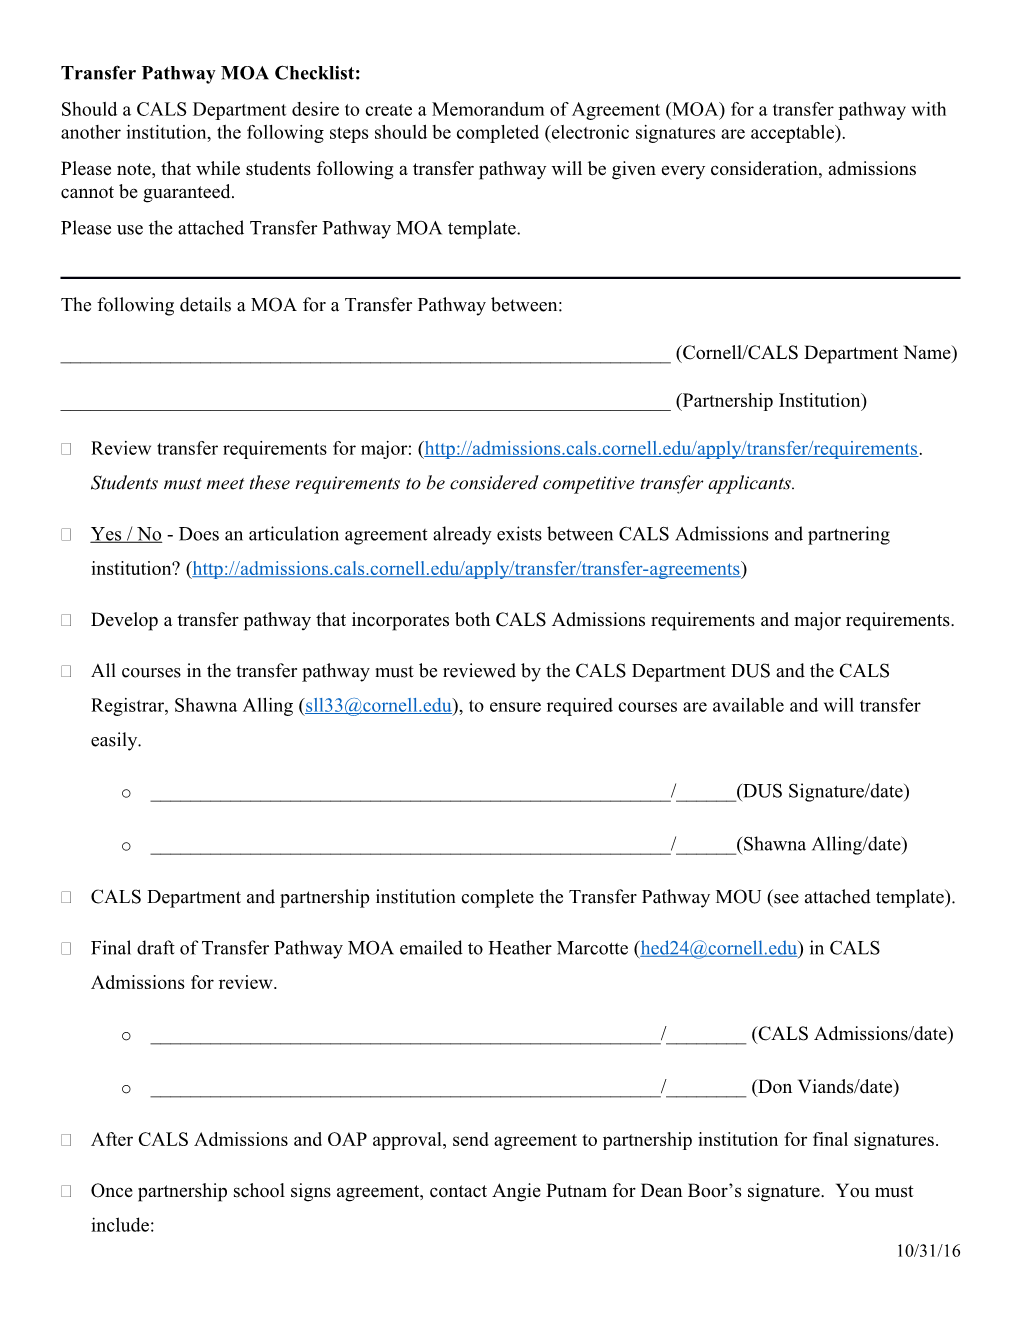 Transfer Pathway MOA Checklist